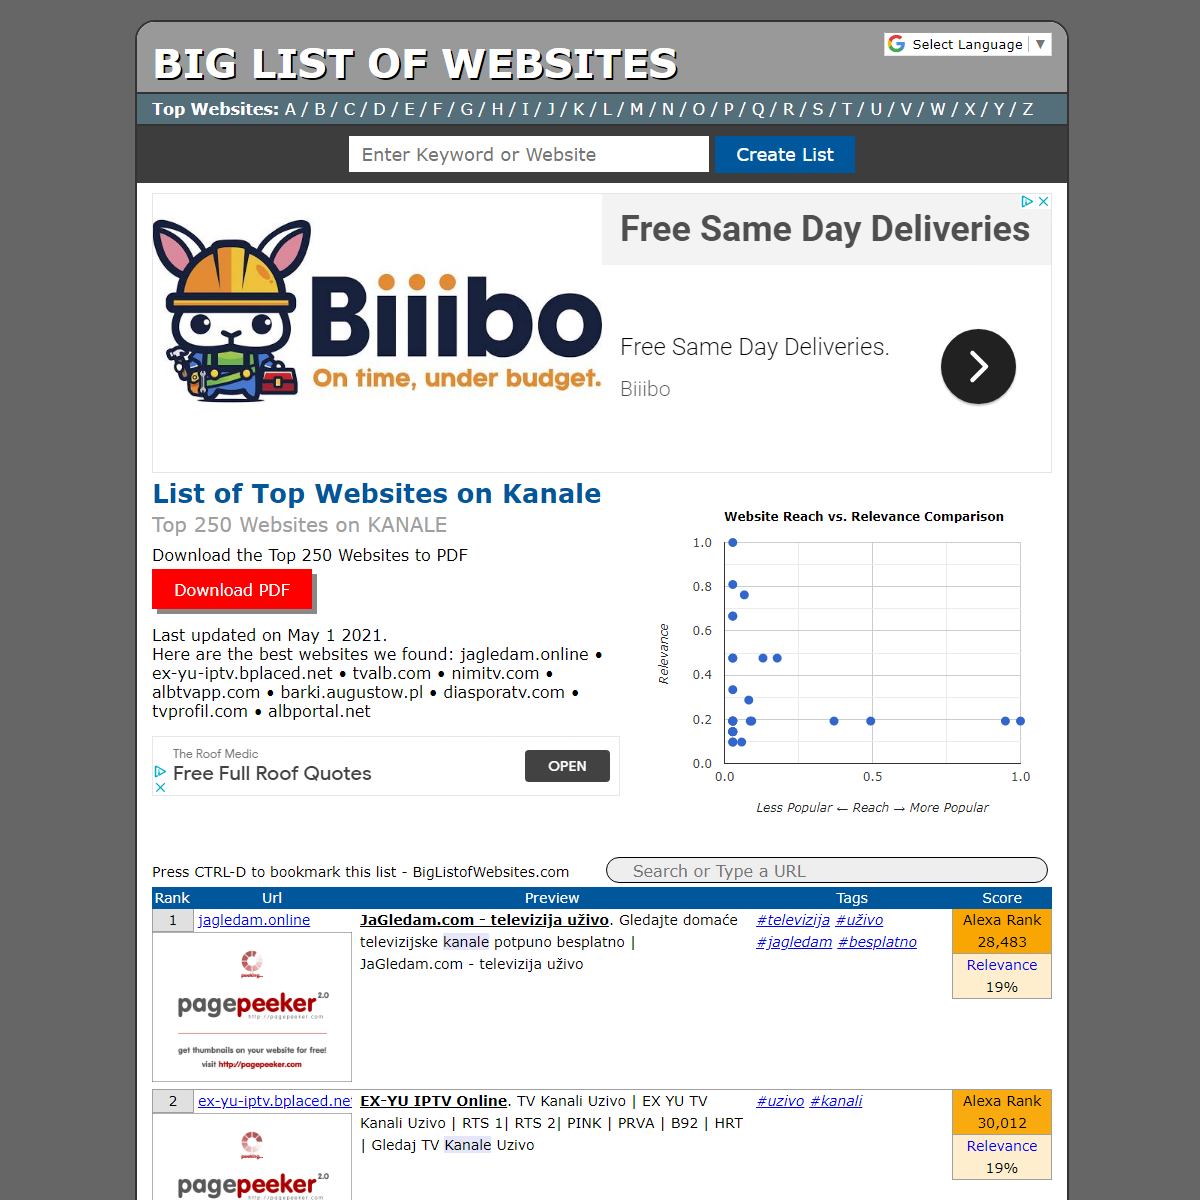 A complete backup of http://biglistofwebsites.com/list-top-websites-on-kanale